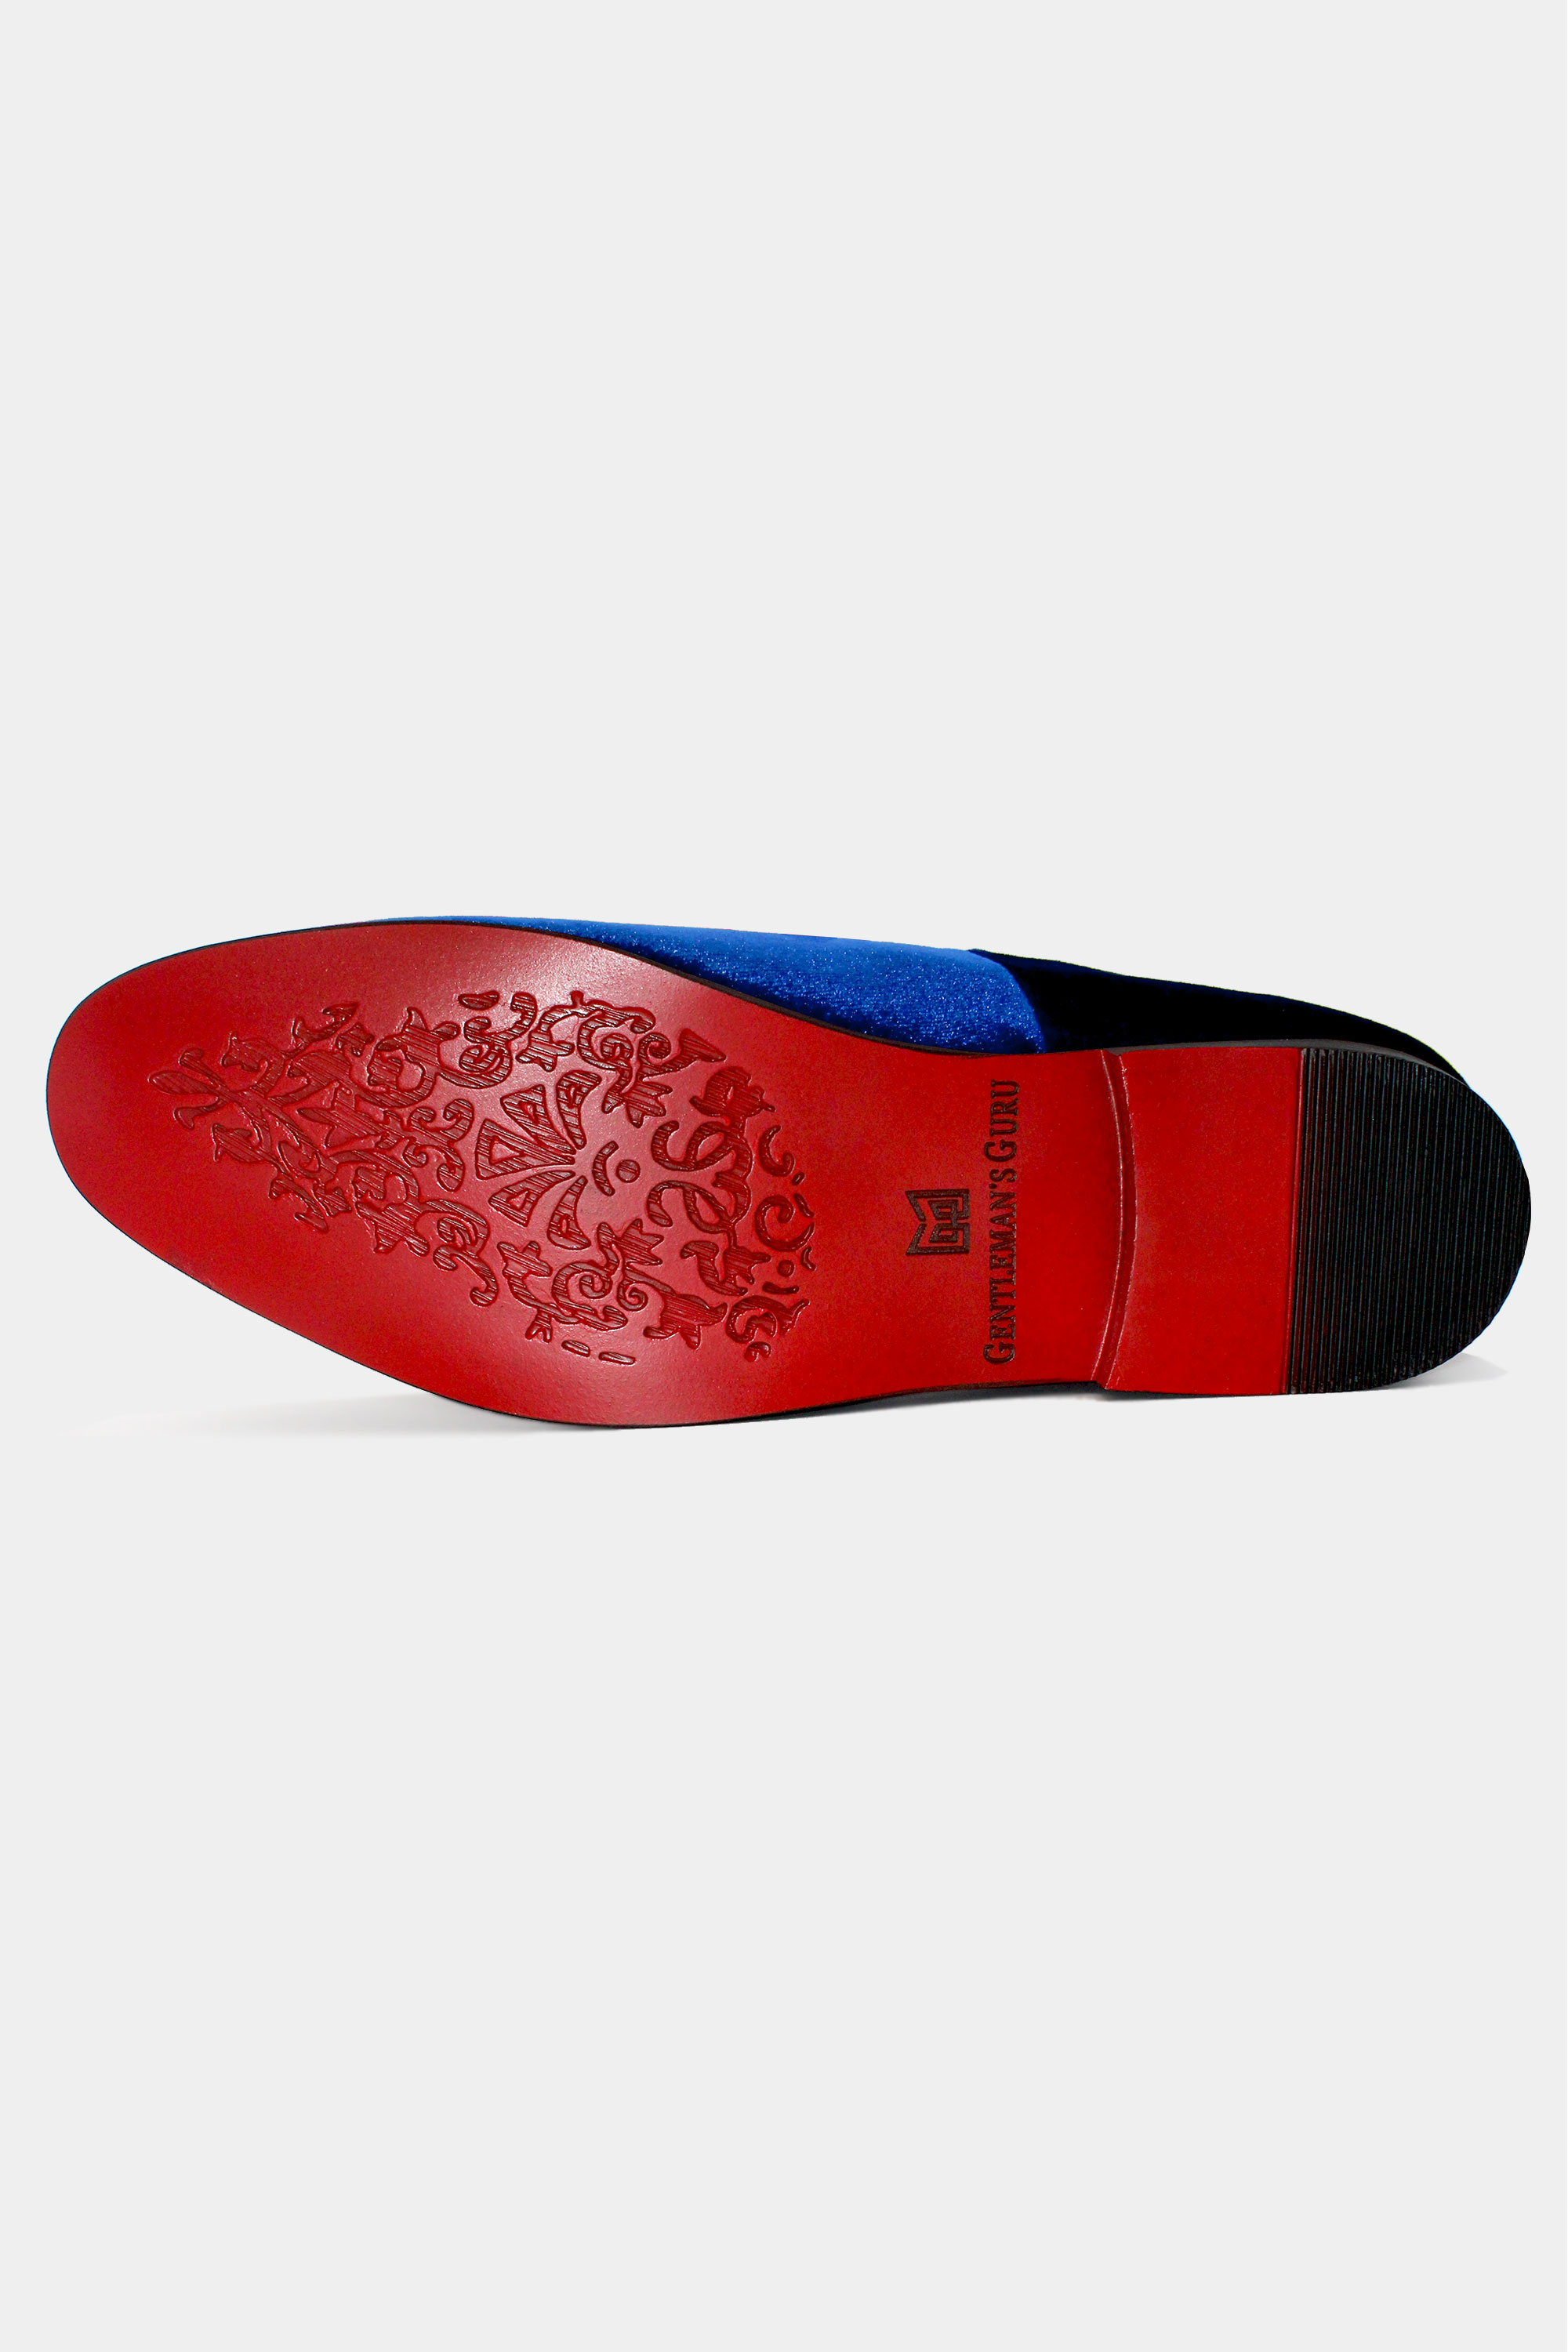 Luxury-Designer-Blue-Loafer-Shoes-from-Gentlemansguru.com